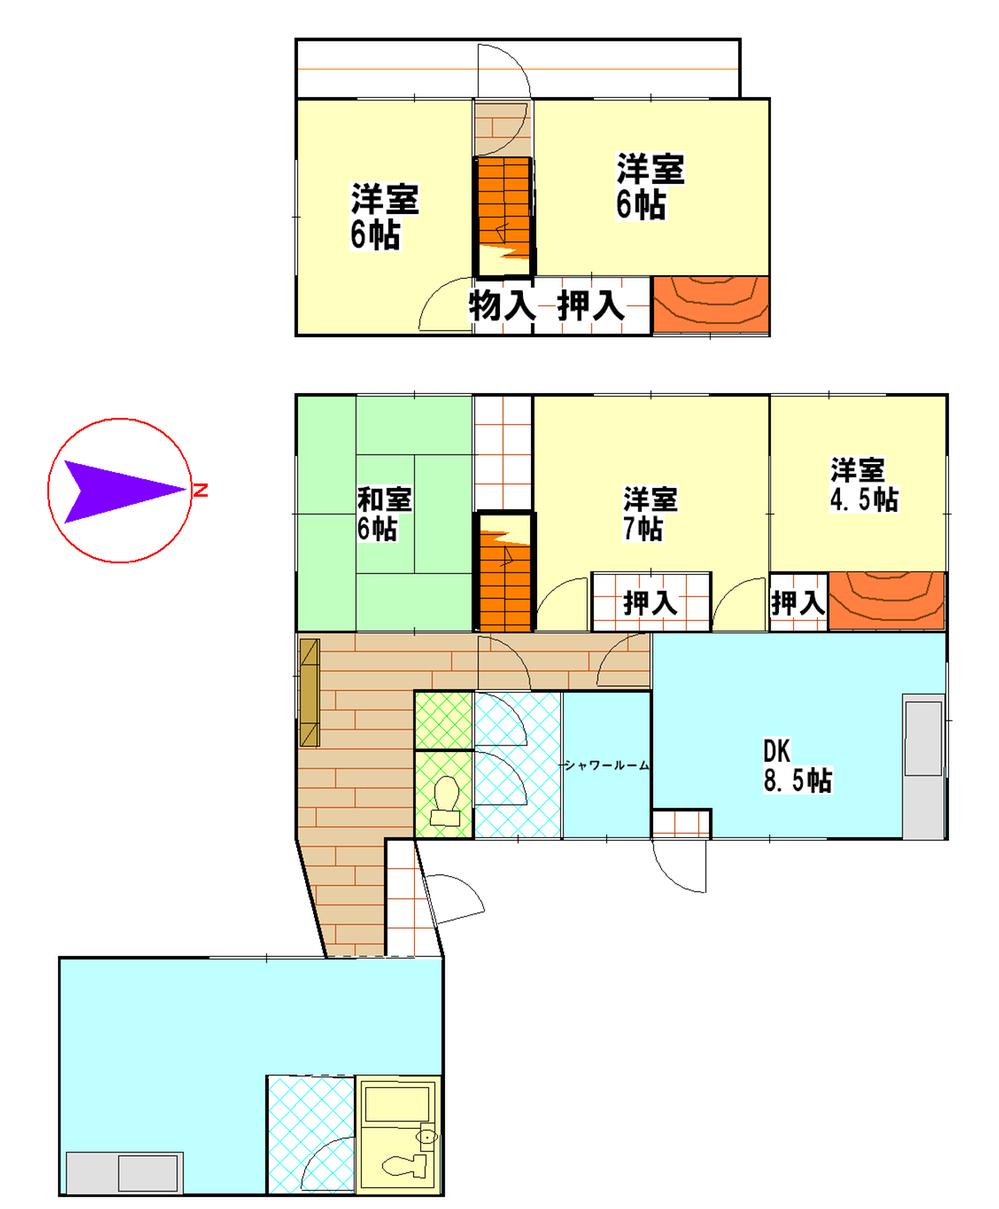 Floor plan. 3 million yen, 5DK + S (storeroom), Land area 239 sq m , Building area 107.8 sq m